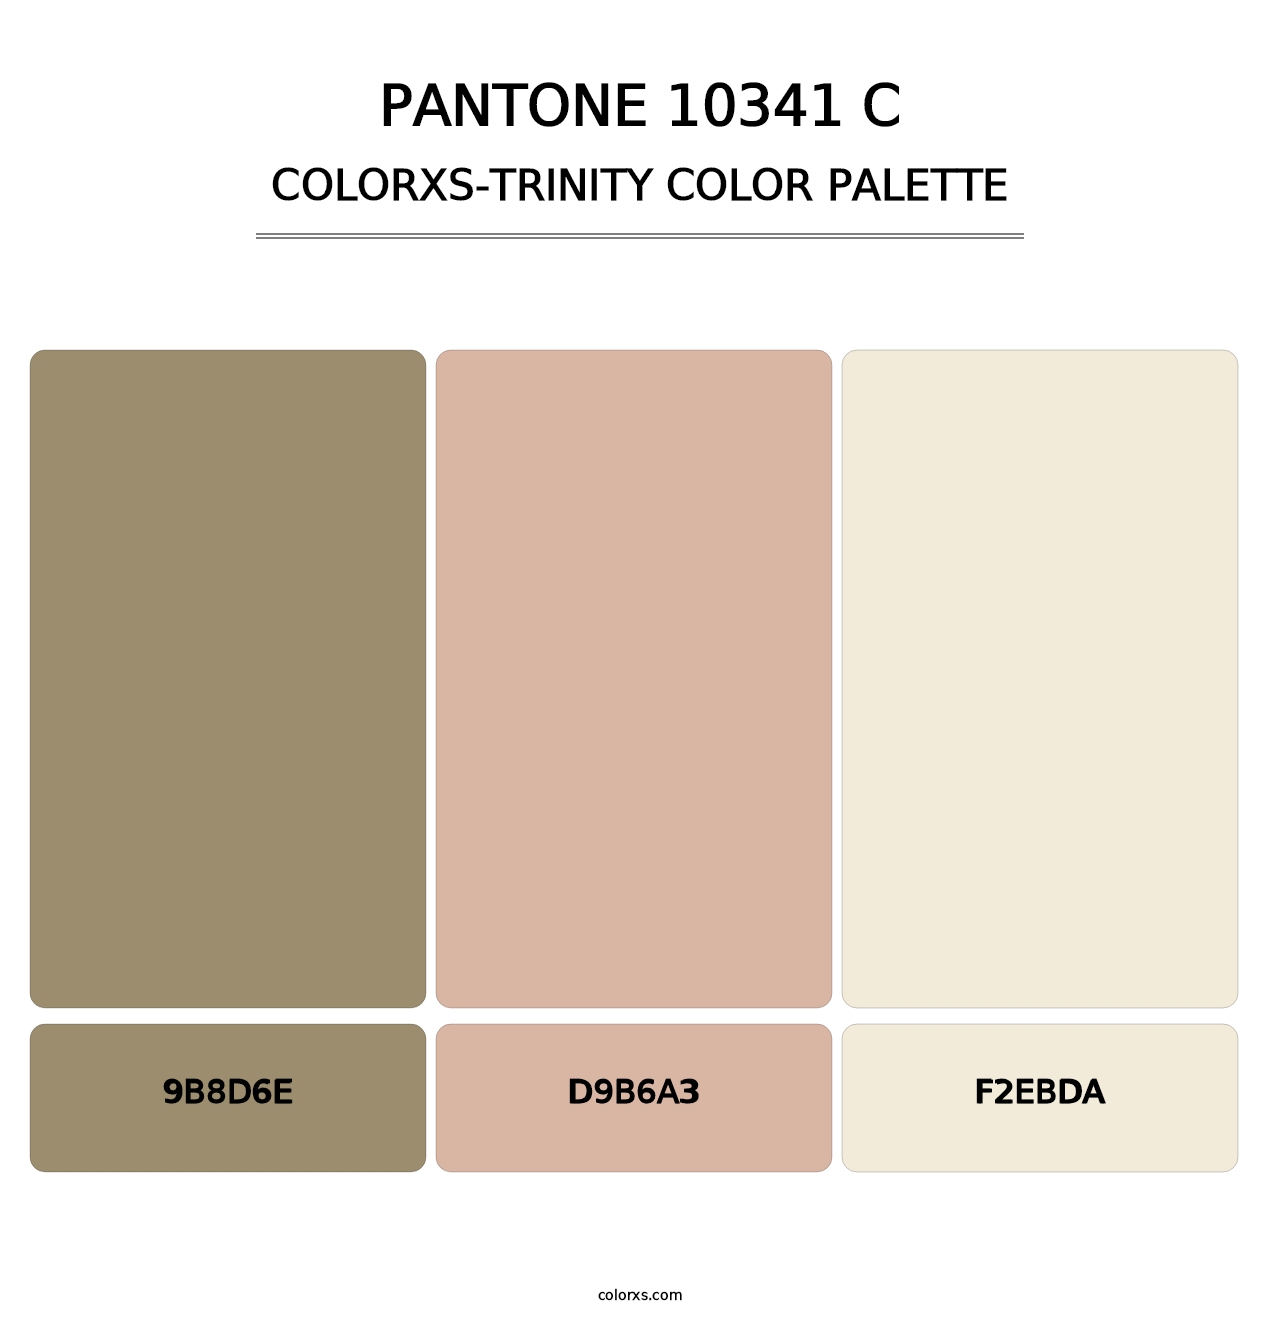 PANTONE 10341 C - Colorxs Trinity Palette